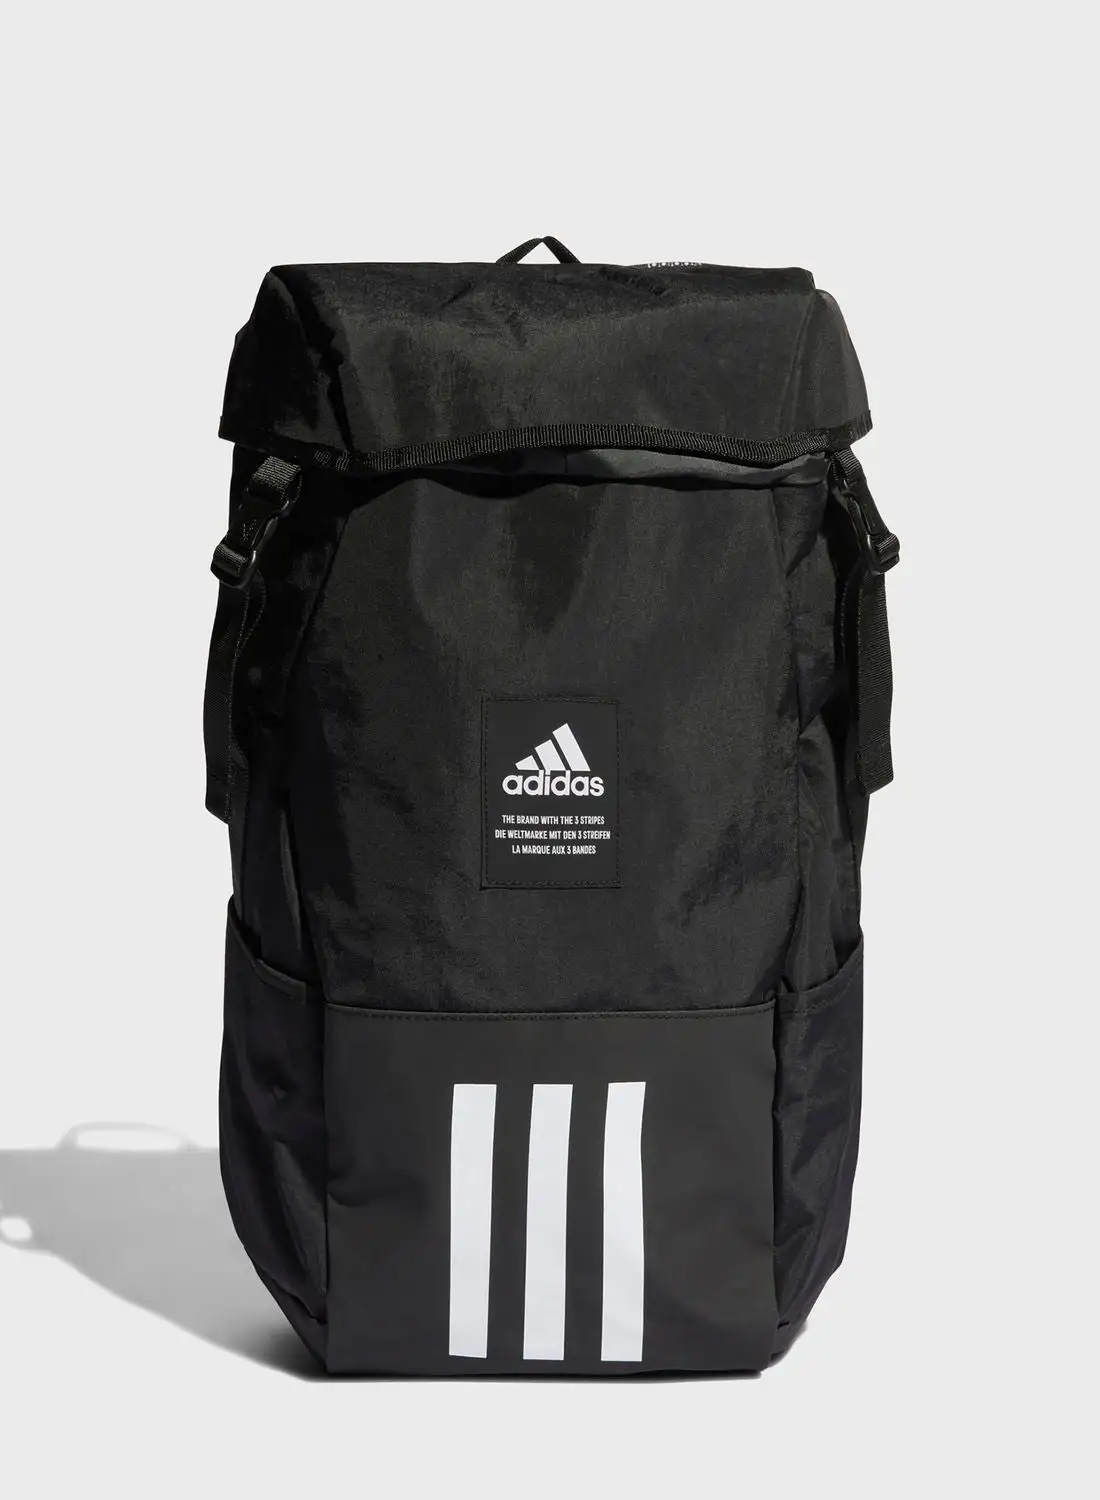 Adidas 4Athletics Backpack